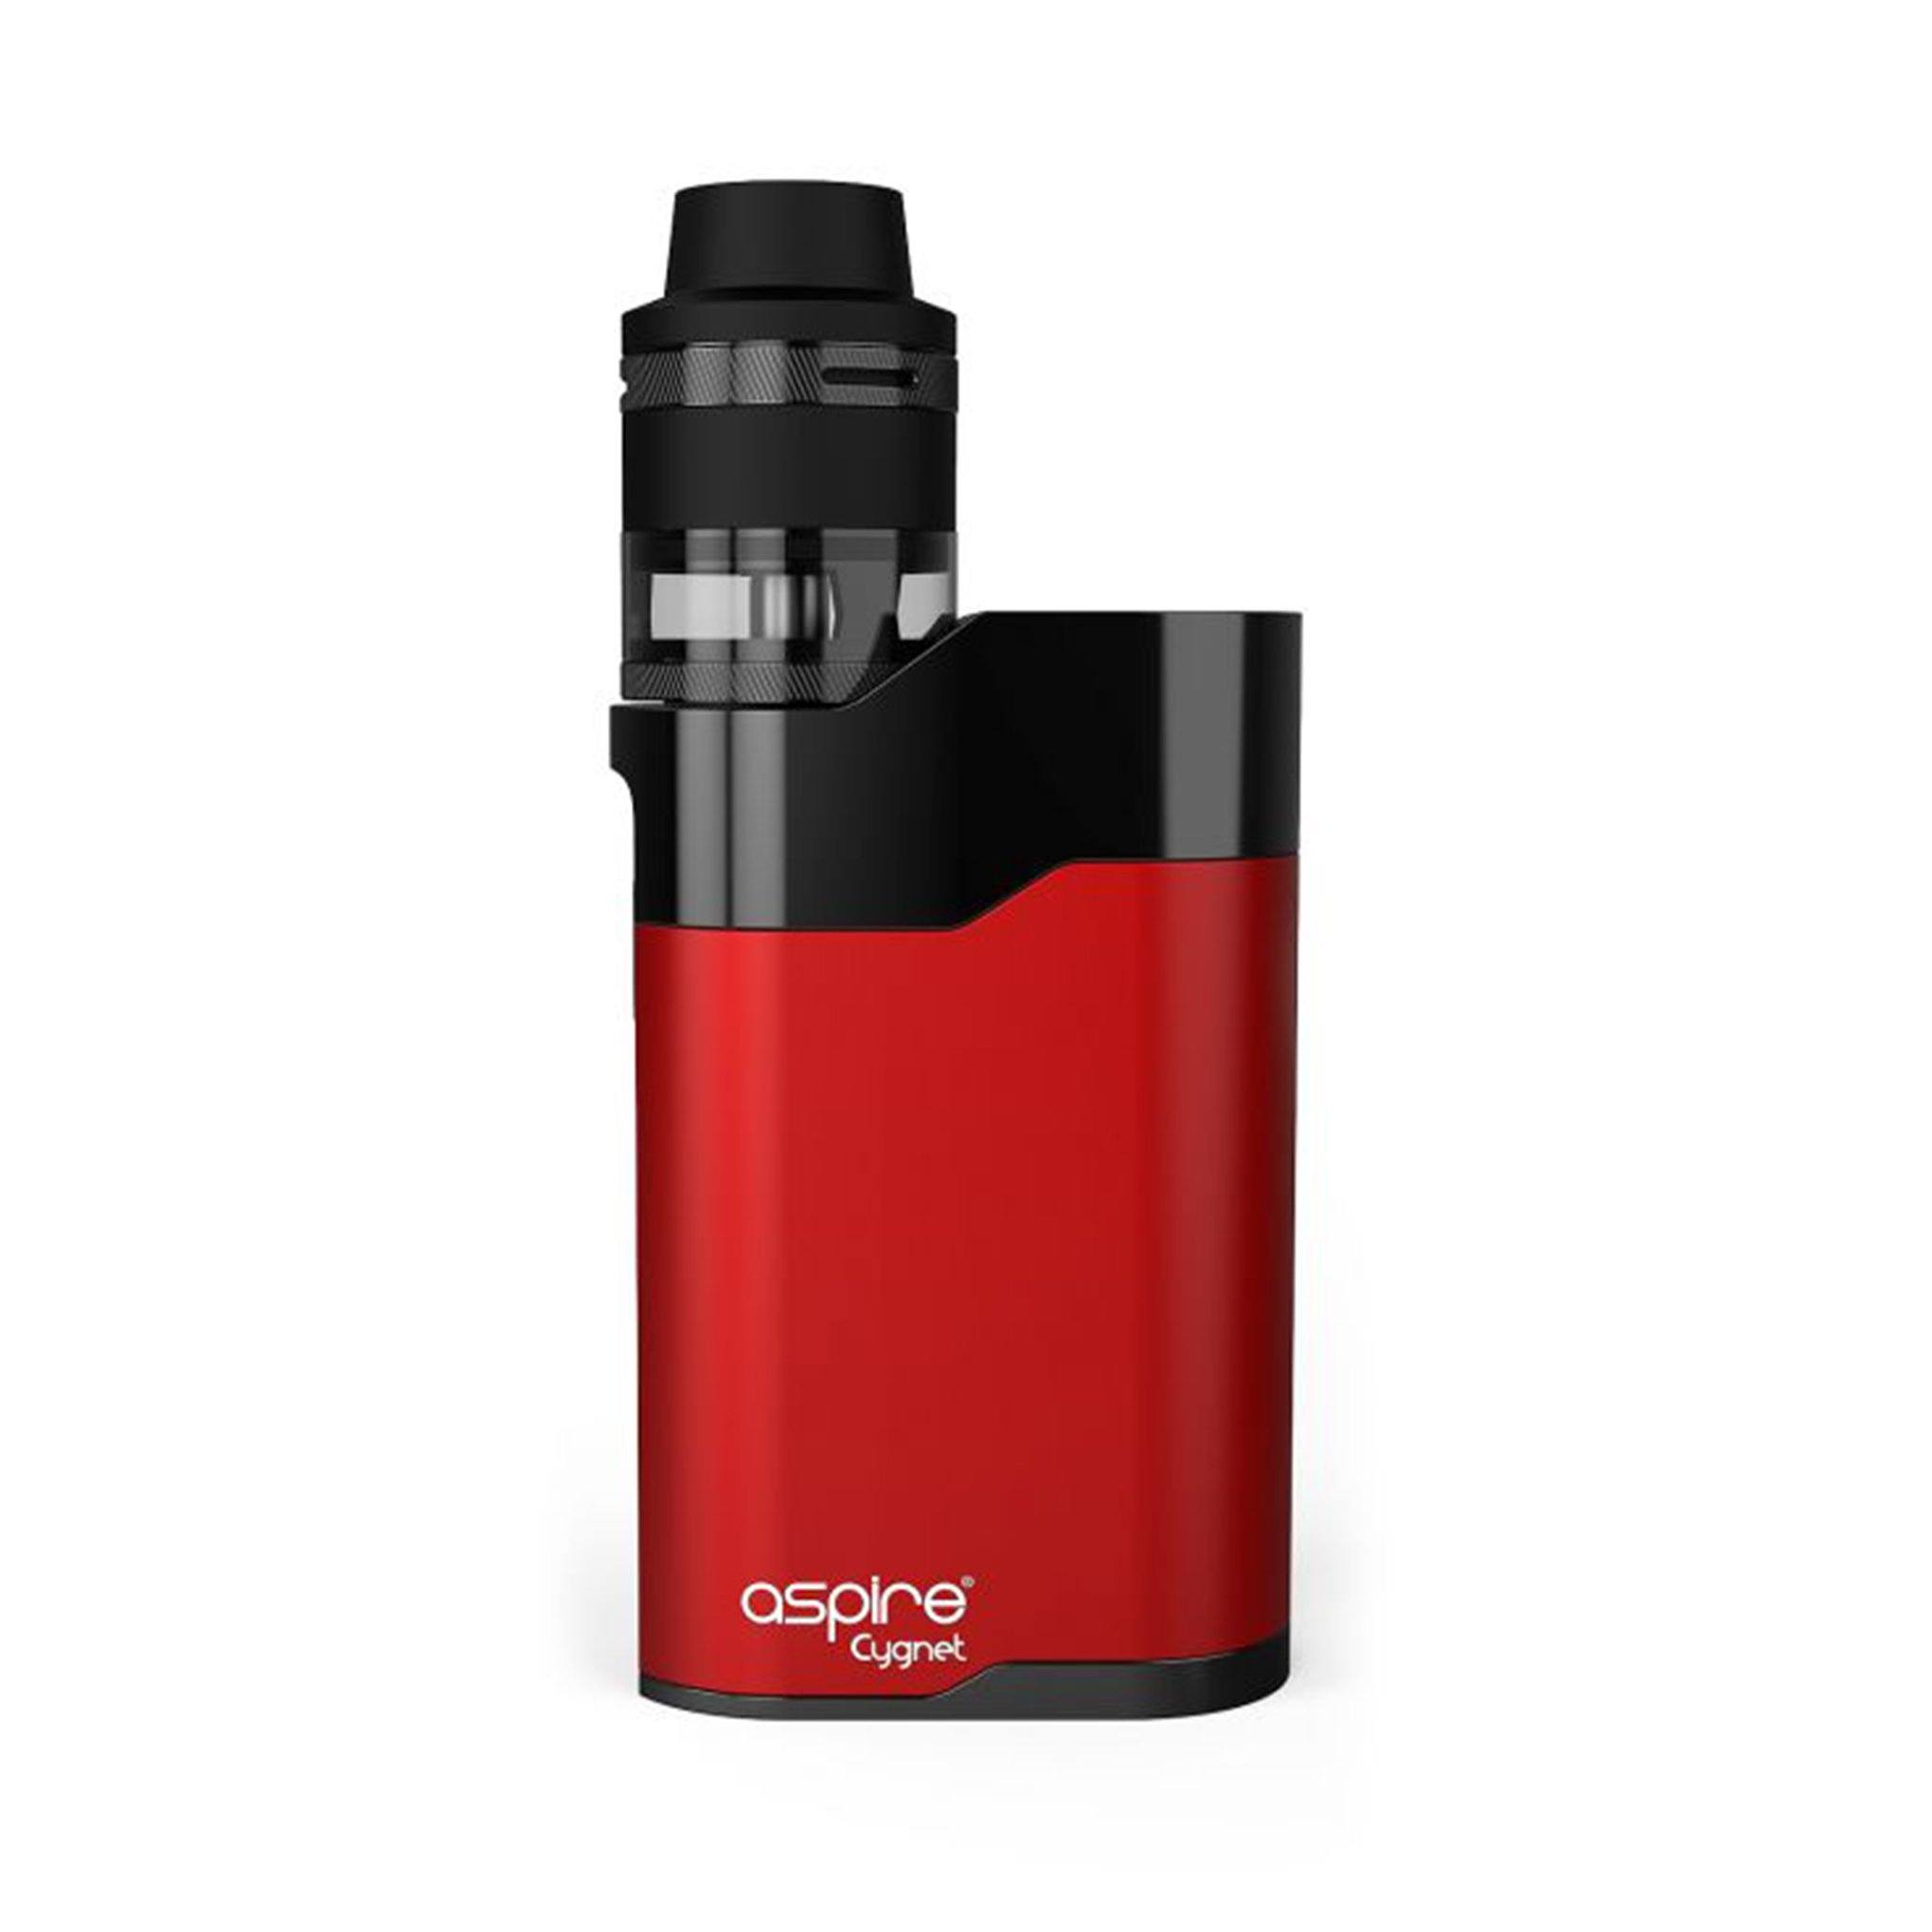 Aspire Cygnet Revvo Kit Black/Red